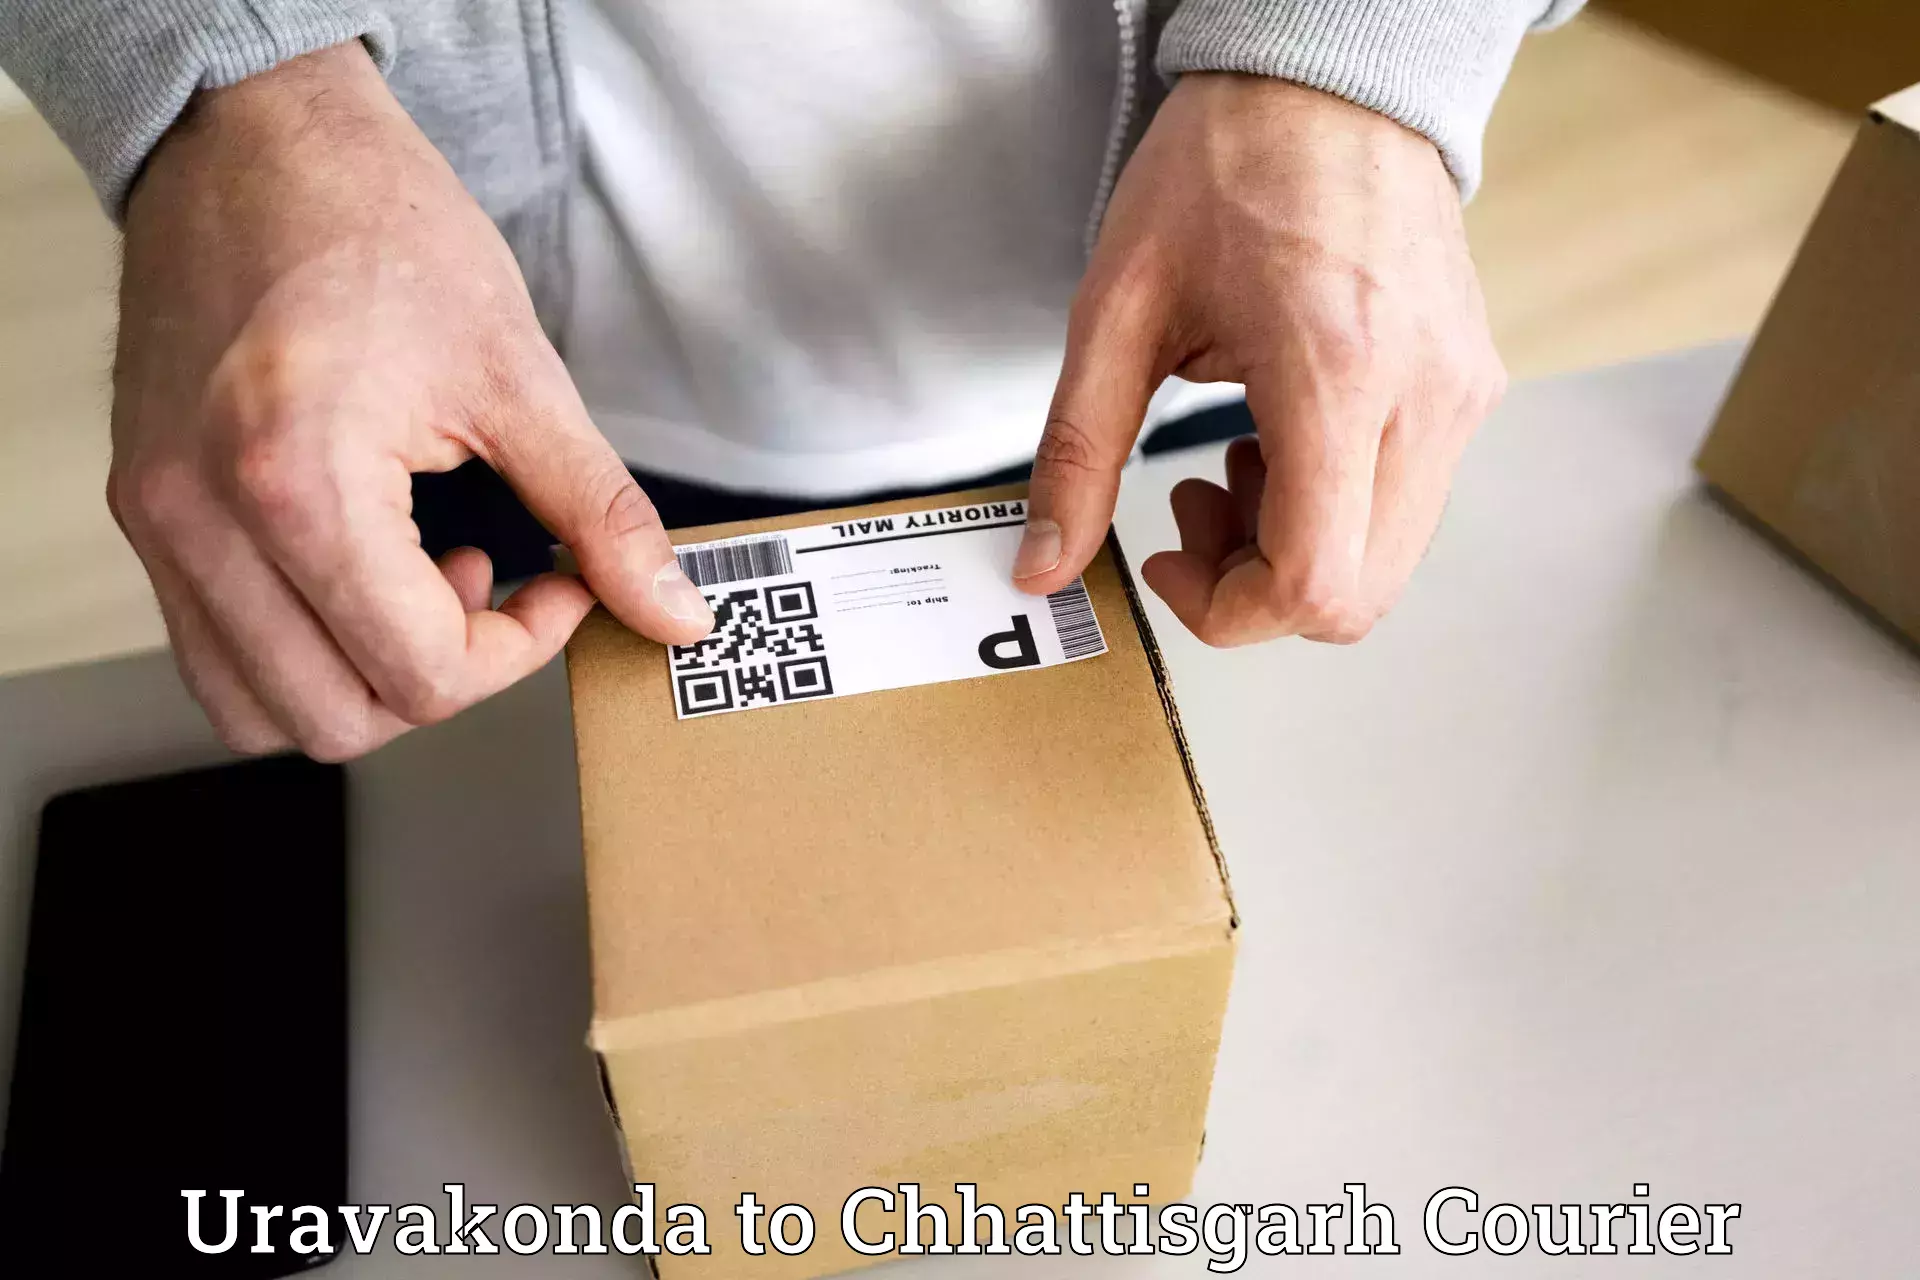 State-of-the-art courier technology Uravakonda to Berla